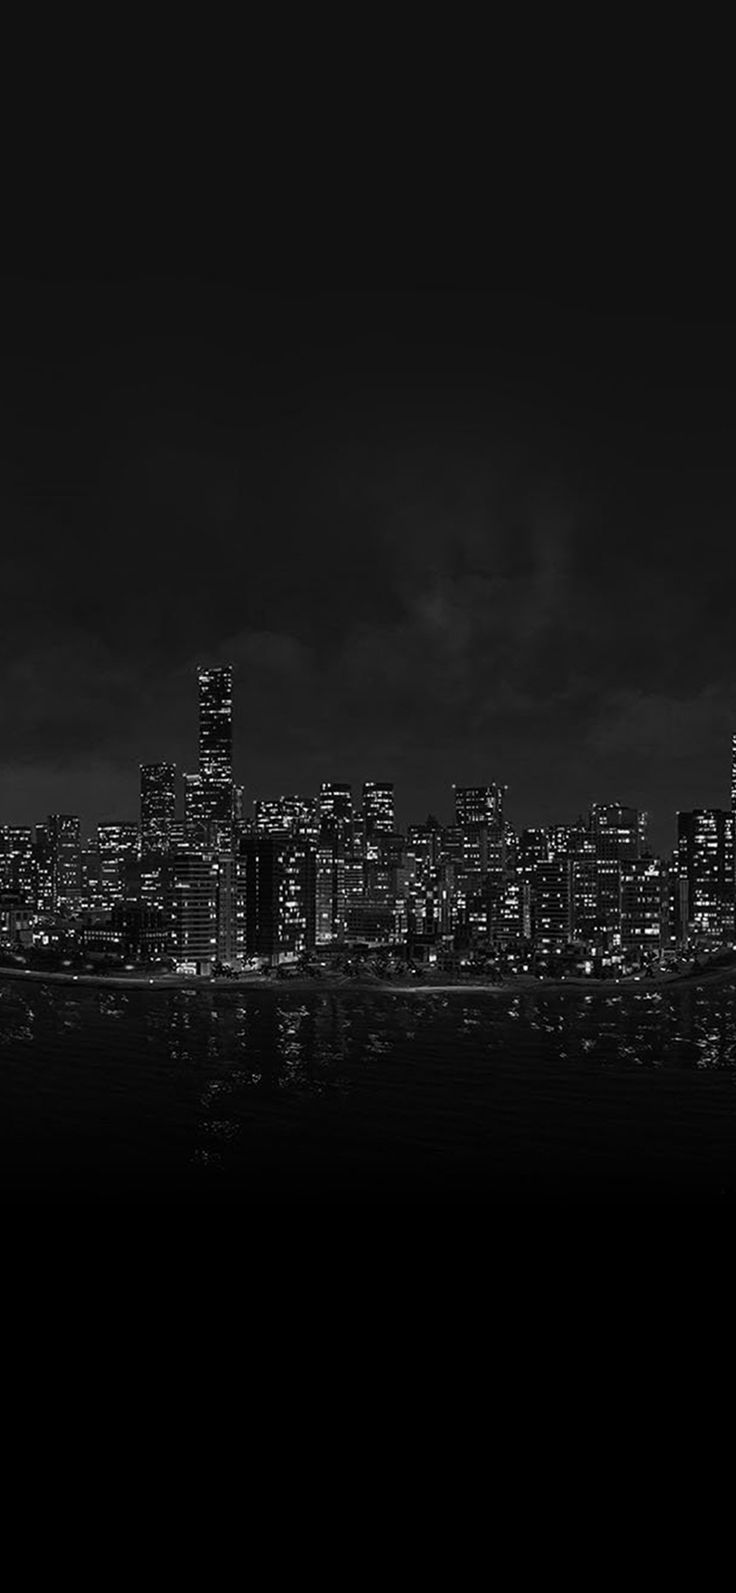 Watchdog Night City Light View From Sea #iPhone #X #wallpaper. Black wallpaper iphone, Black aesthetic wallpaper, City lights wallpaper